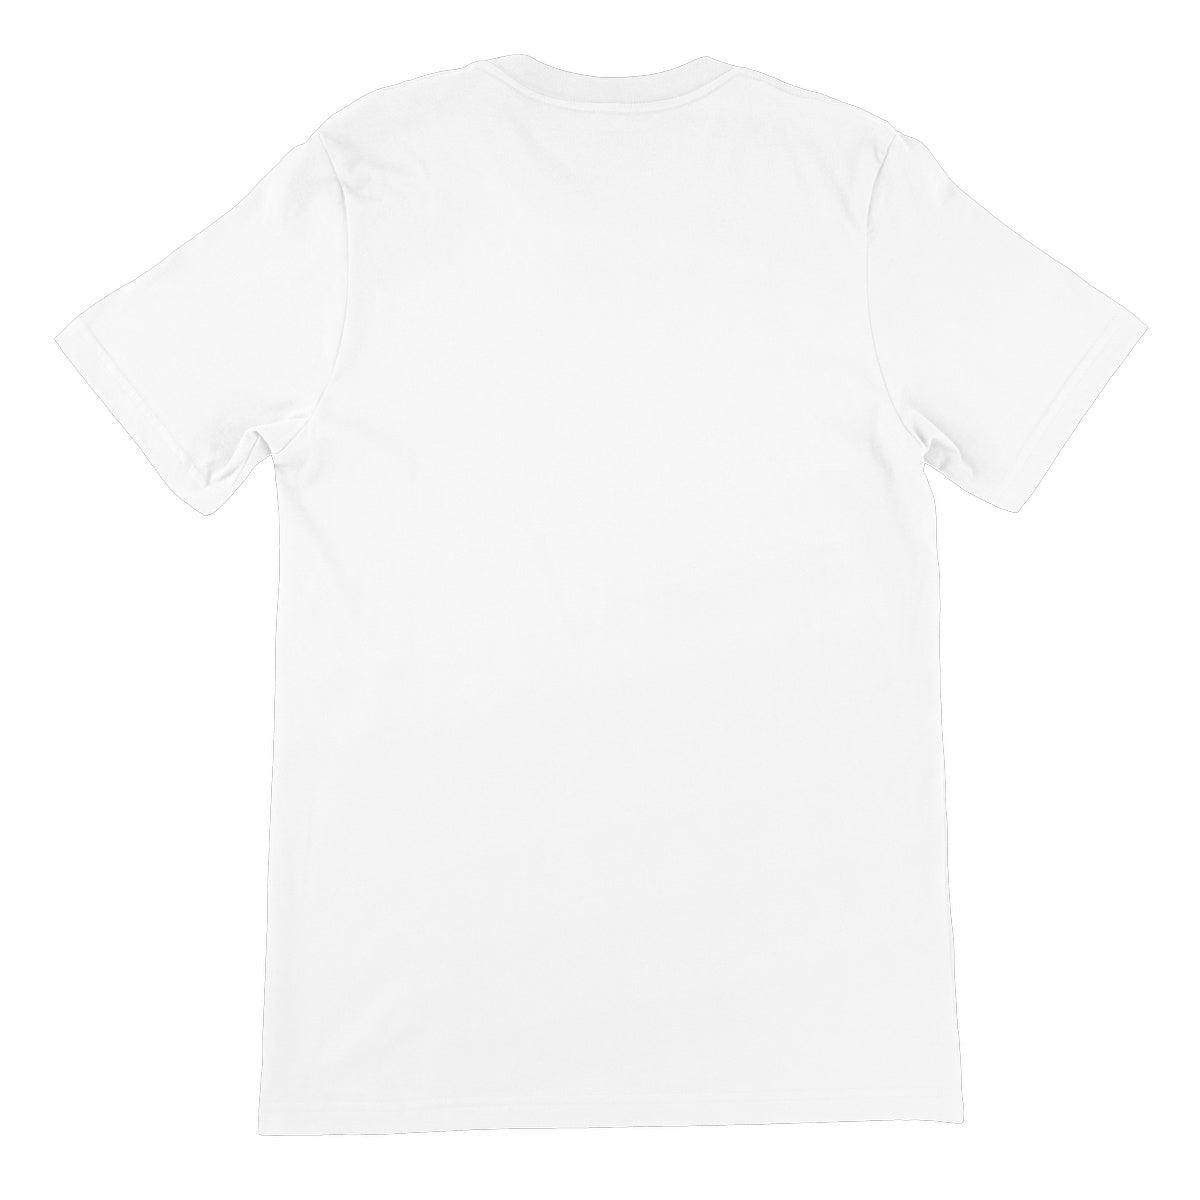 Linework Unisex Short Sleeve T-Shirt